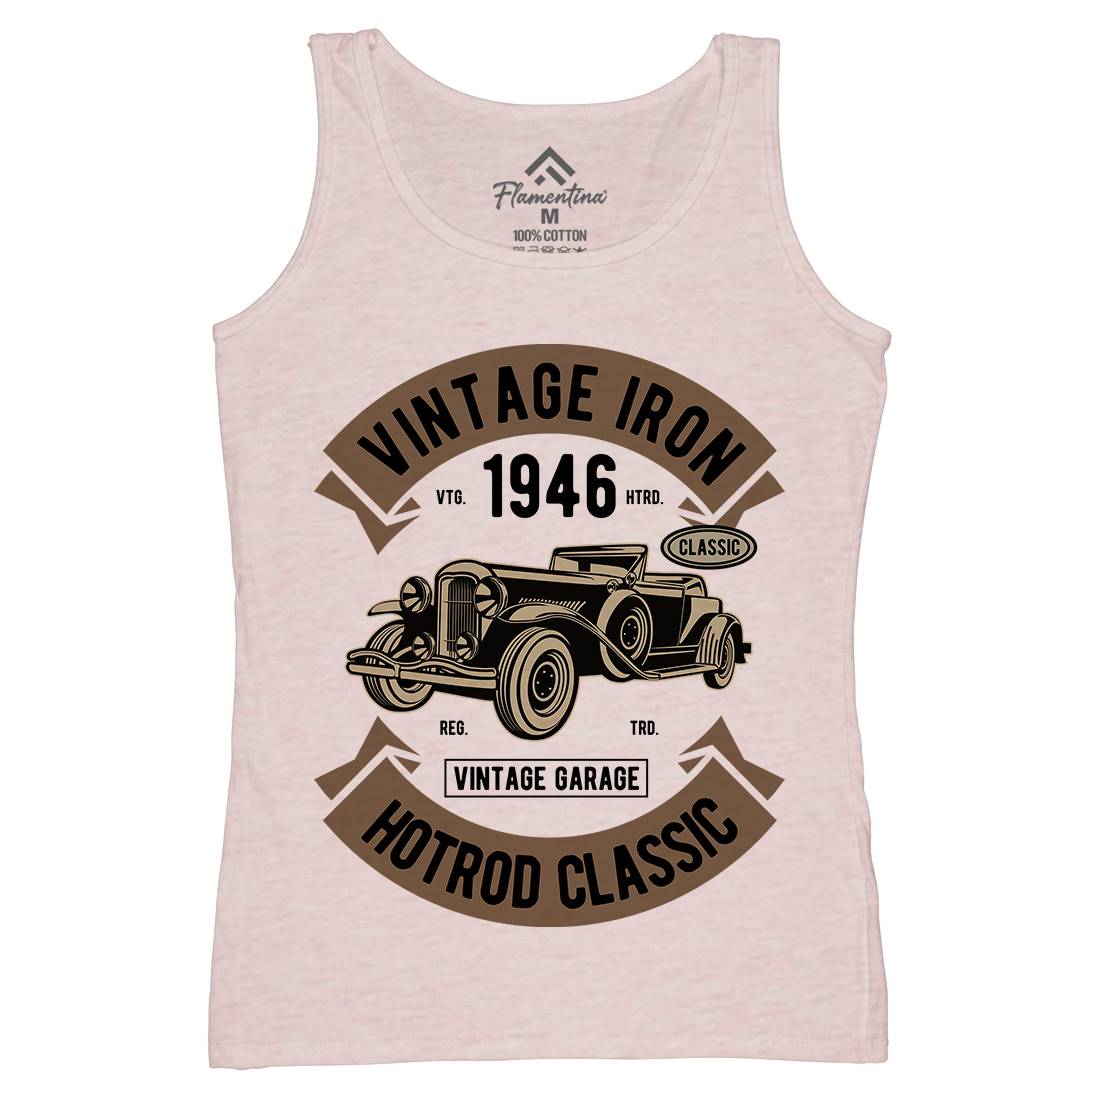 Vintage Iron Classic Womens Organic Tank Top Vest Cars D595